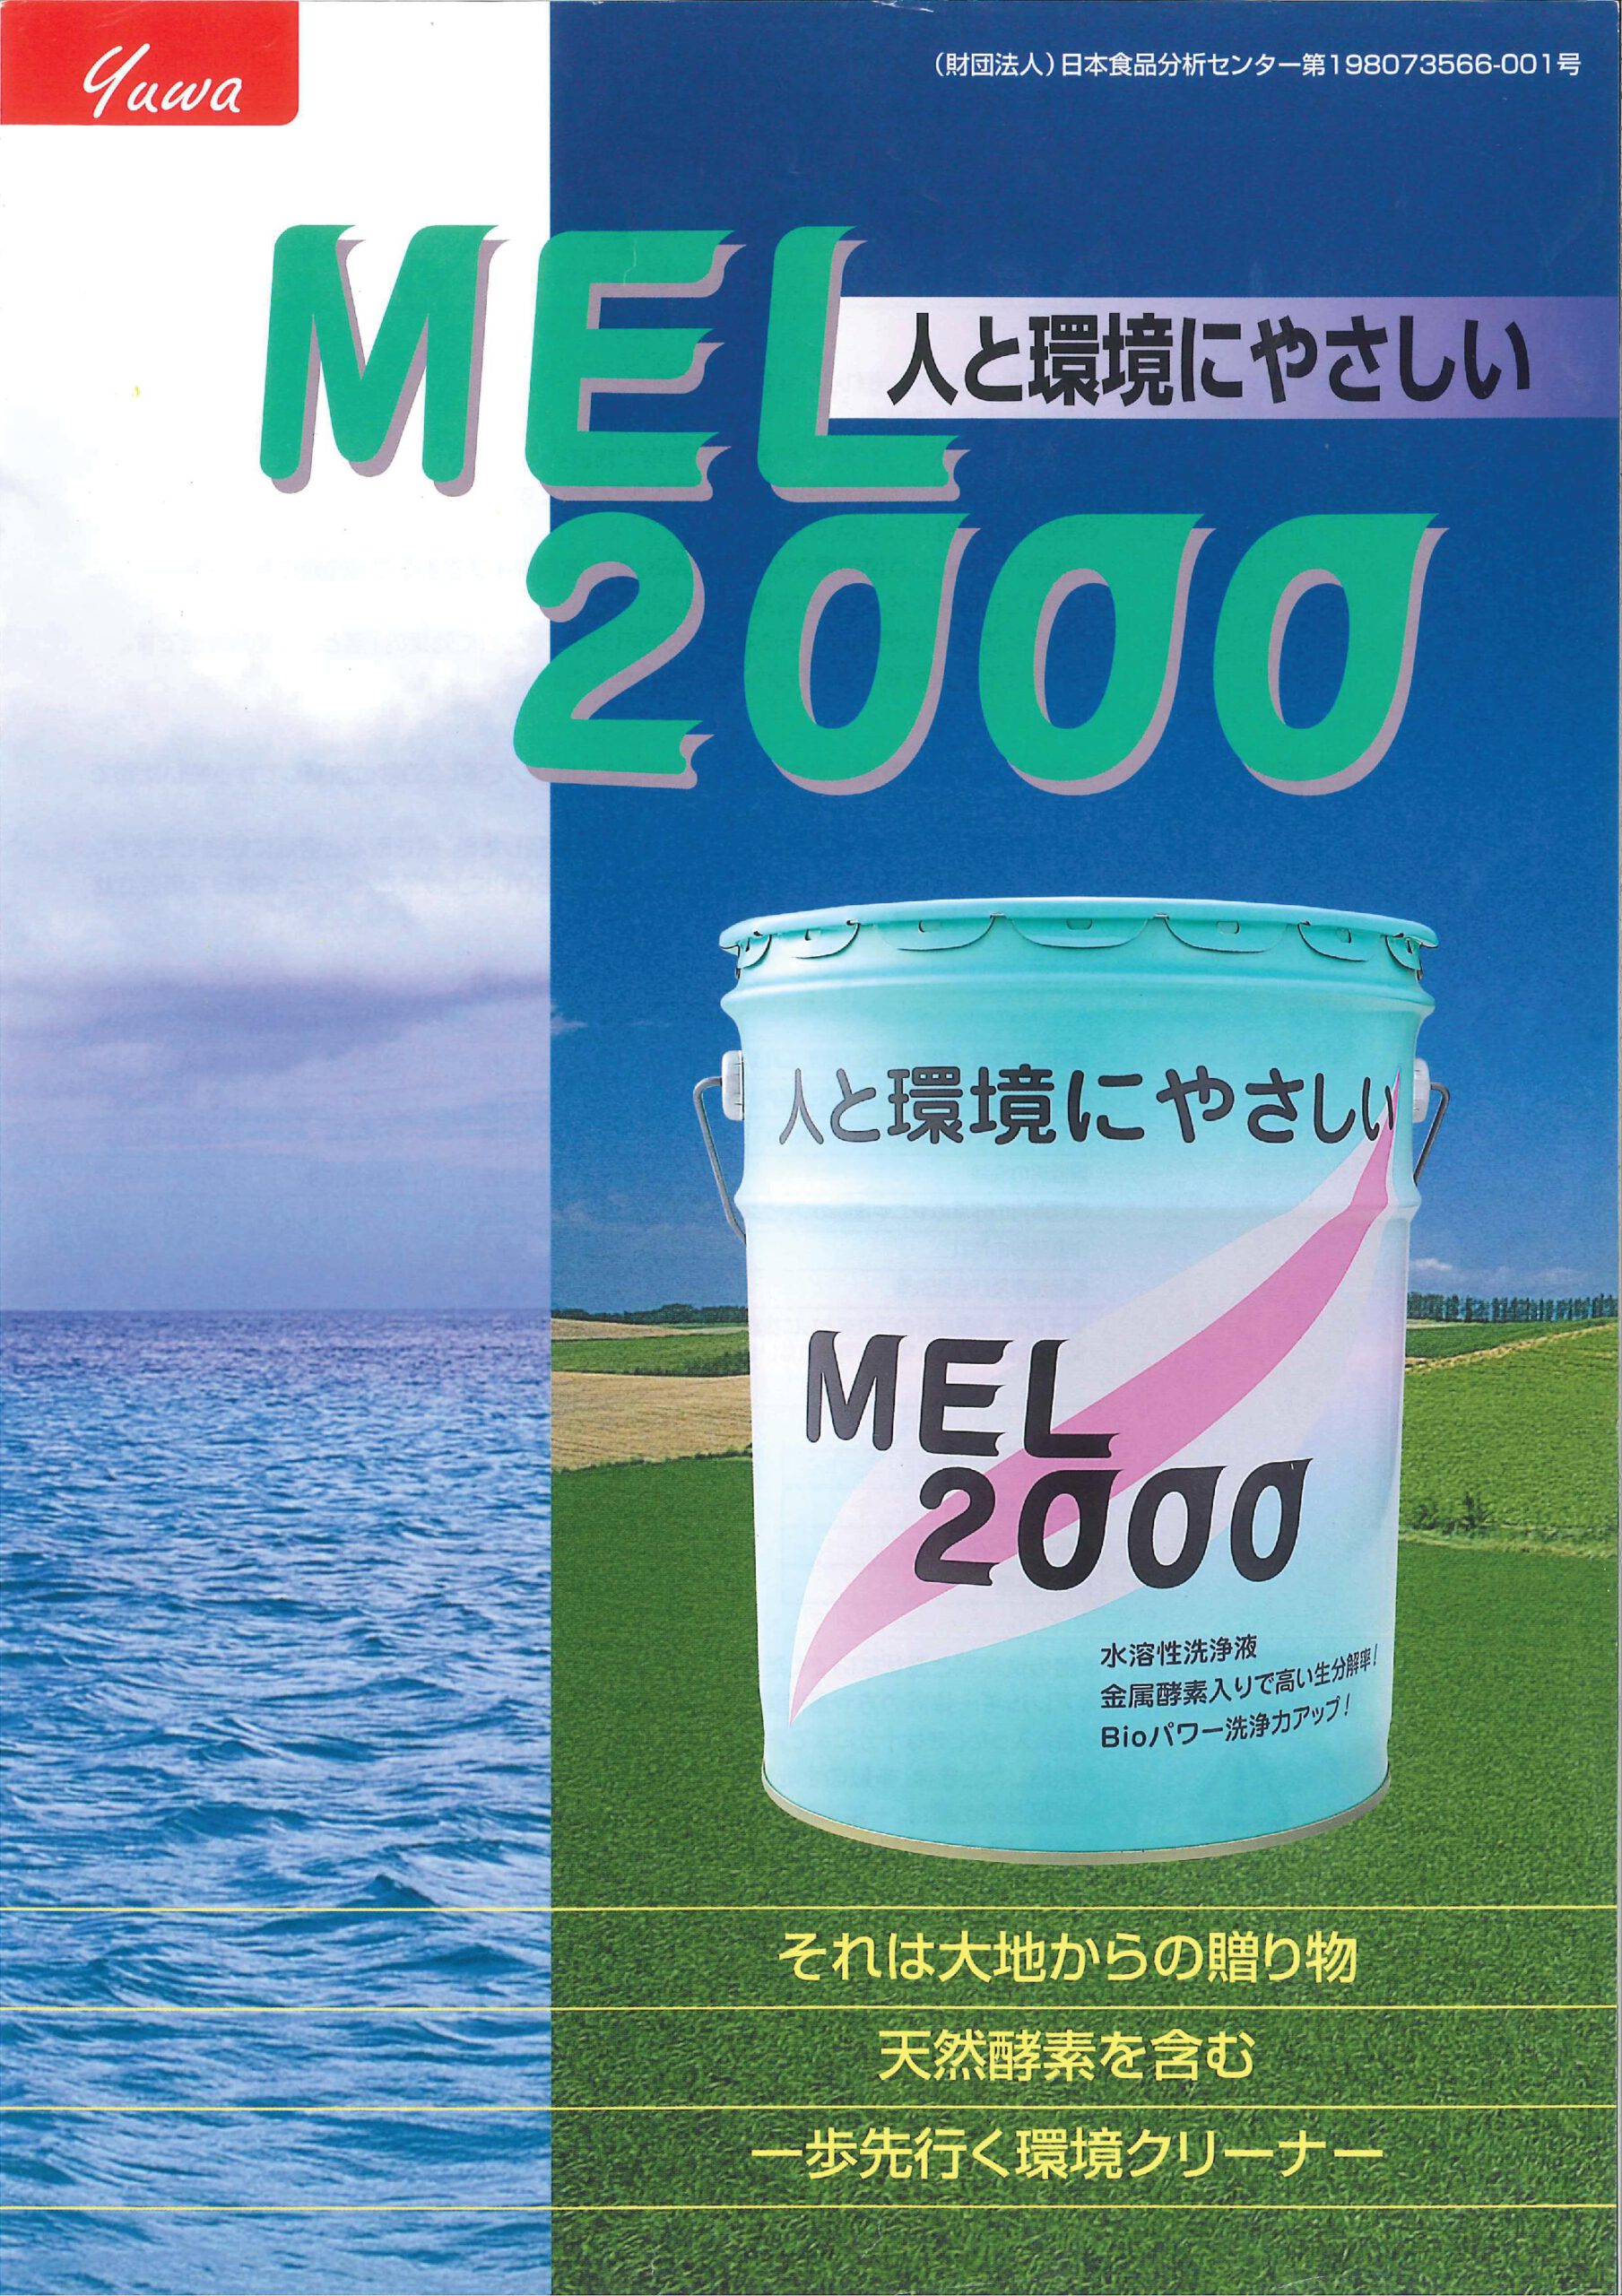 MEL2000 洗浄液のご紹介イメージ